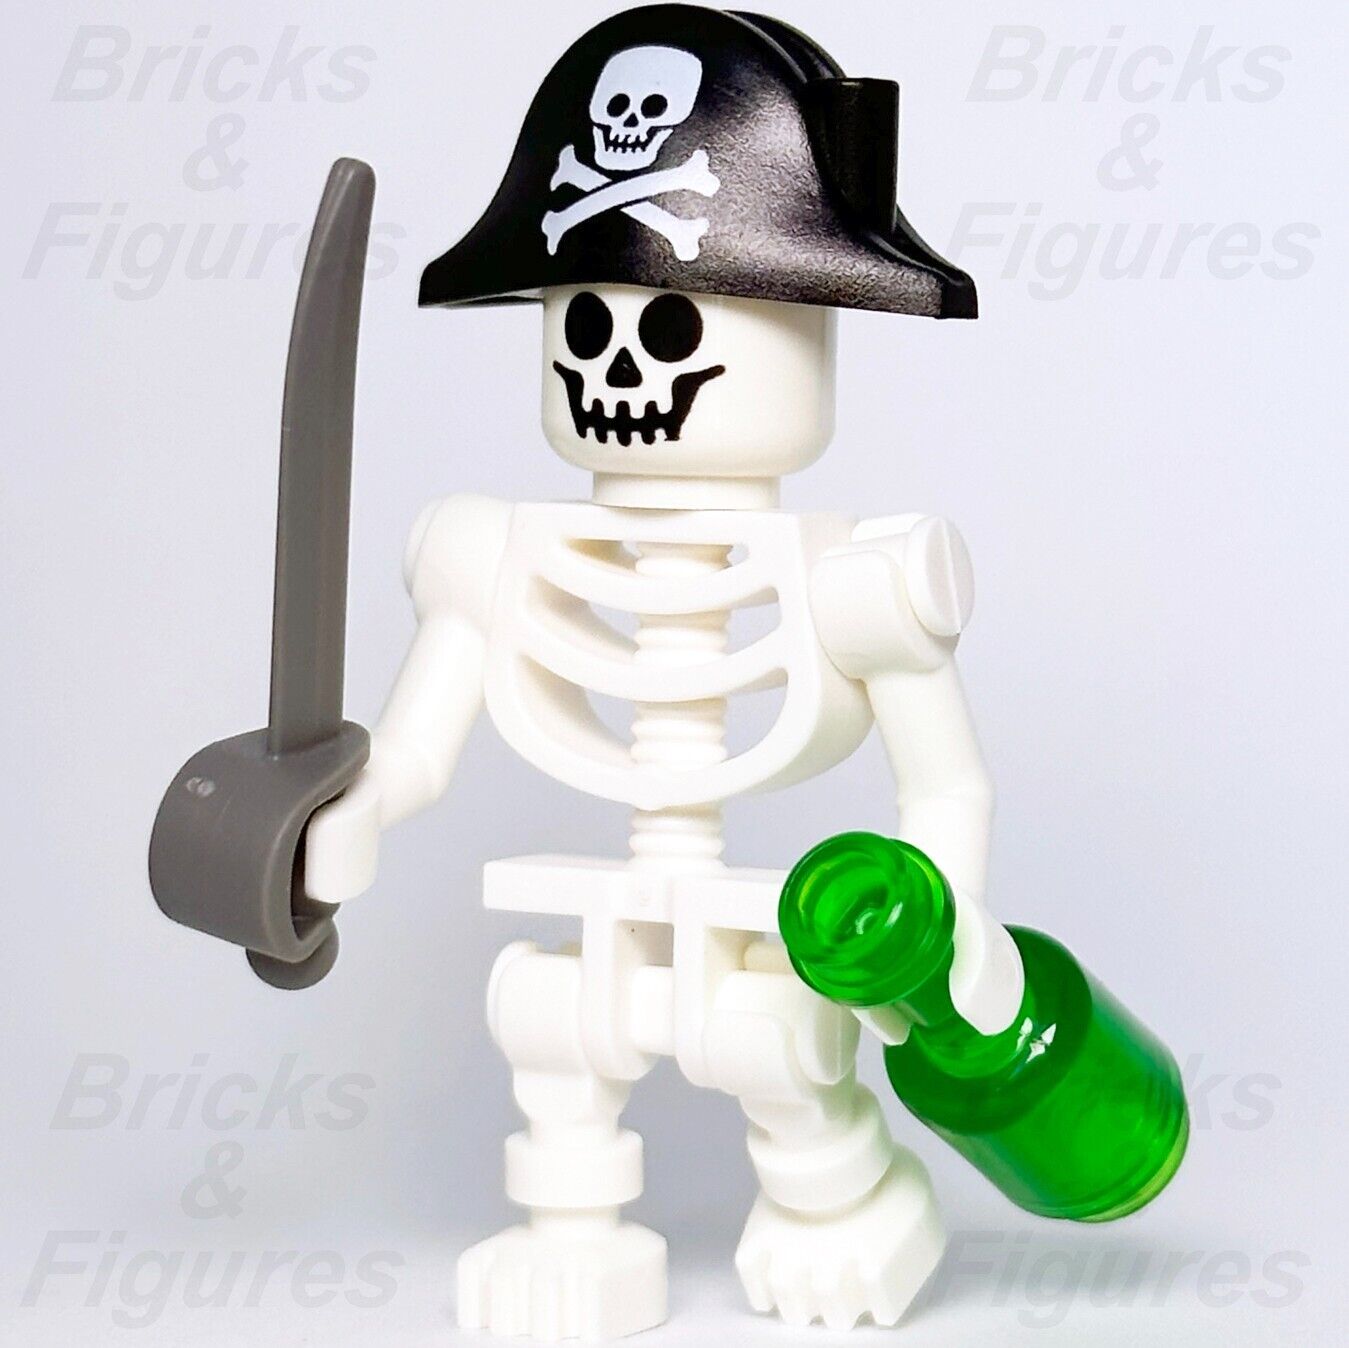 LEGO Pirate Skeleton Minifigure Captain Sword & Bottle 40515 White Minifig New - Bricks & Figures